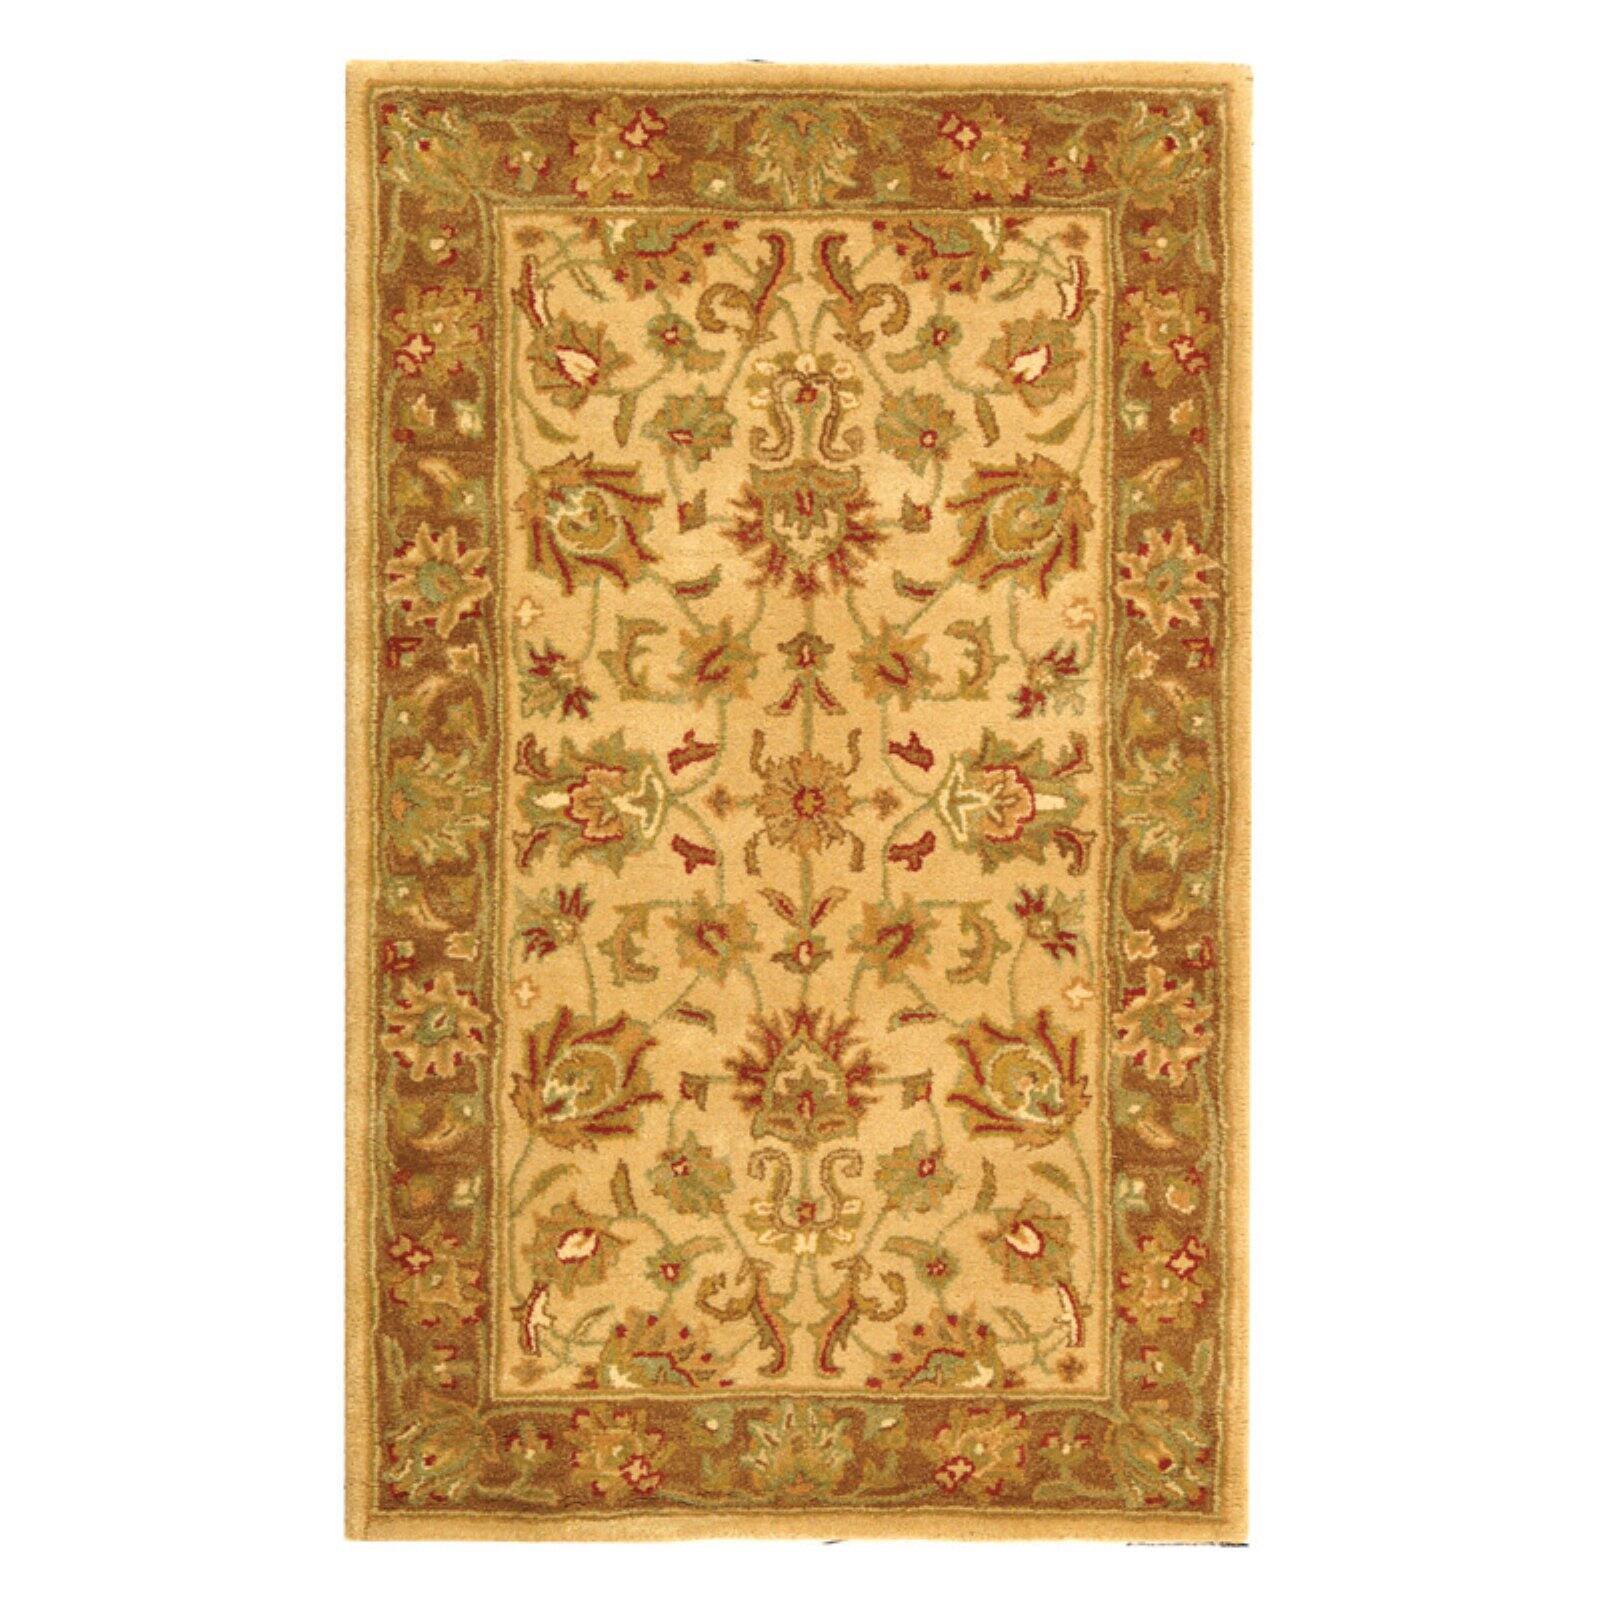 SAFAVIEH Heritage Regis Traditional Wool Area Rug, Ivory/Brown, 7'6" x 9'6" Oval - image 5 of 9